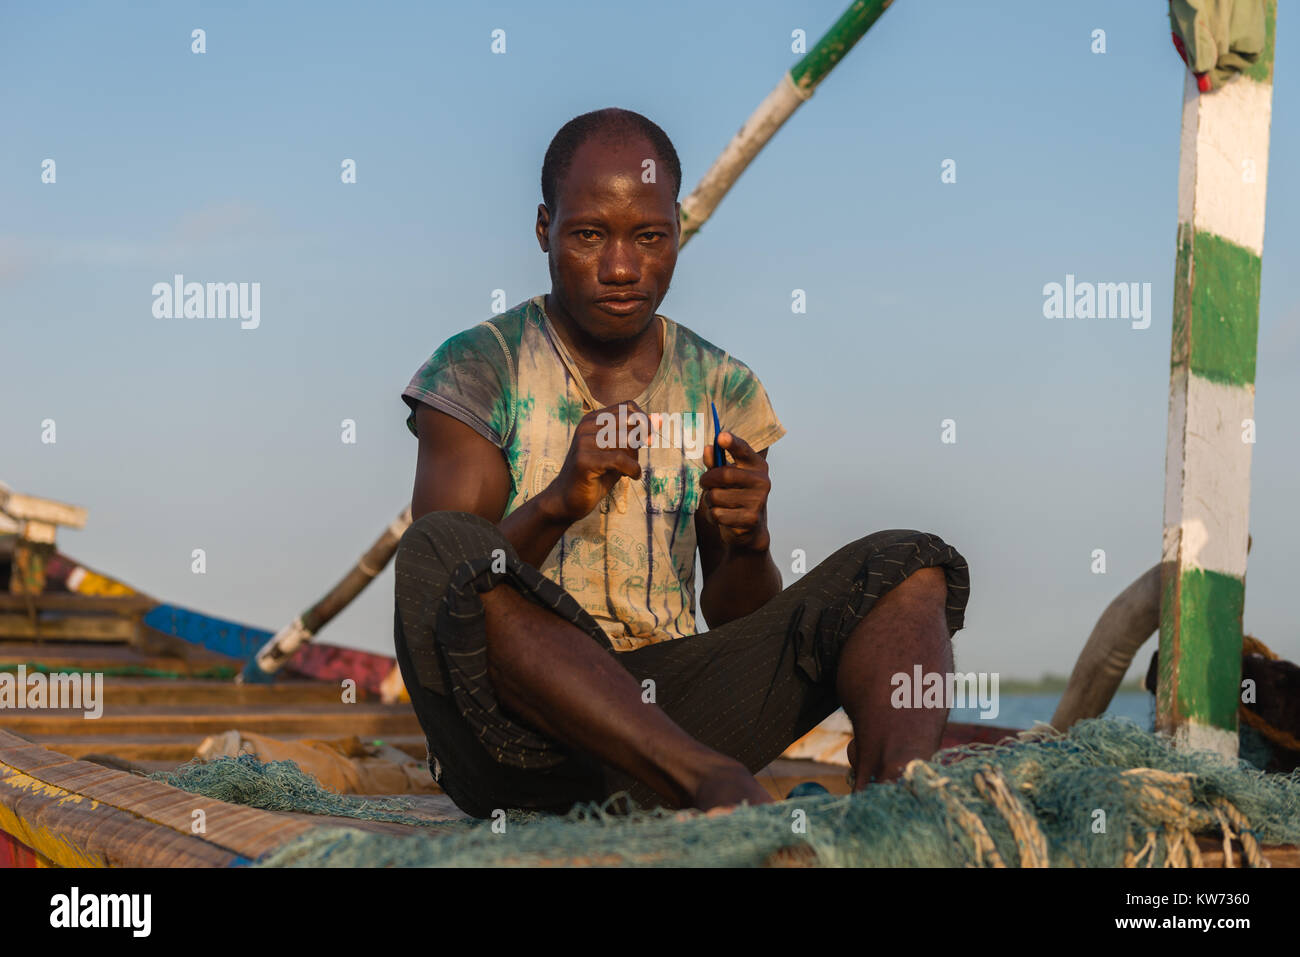 Fischer Netze reparieren, in seinem offenen Boot sitzen, Volta River, Ada Foah, Greater Accra Region, Ghana, Afrika Stockfoto